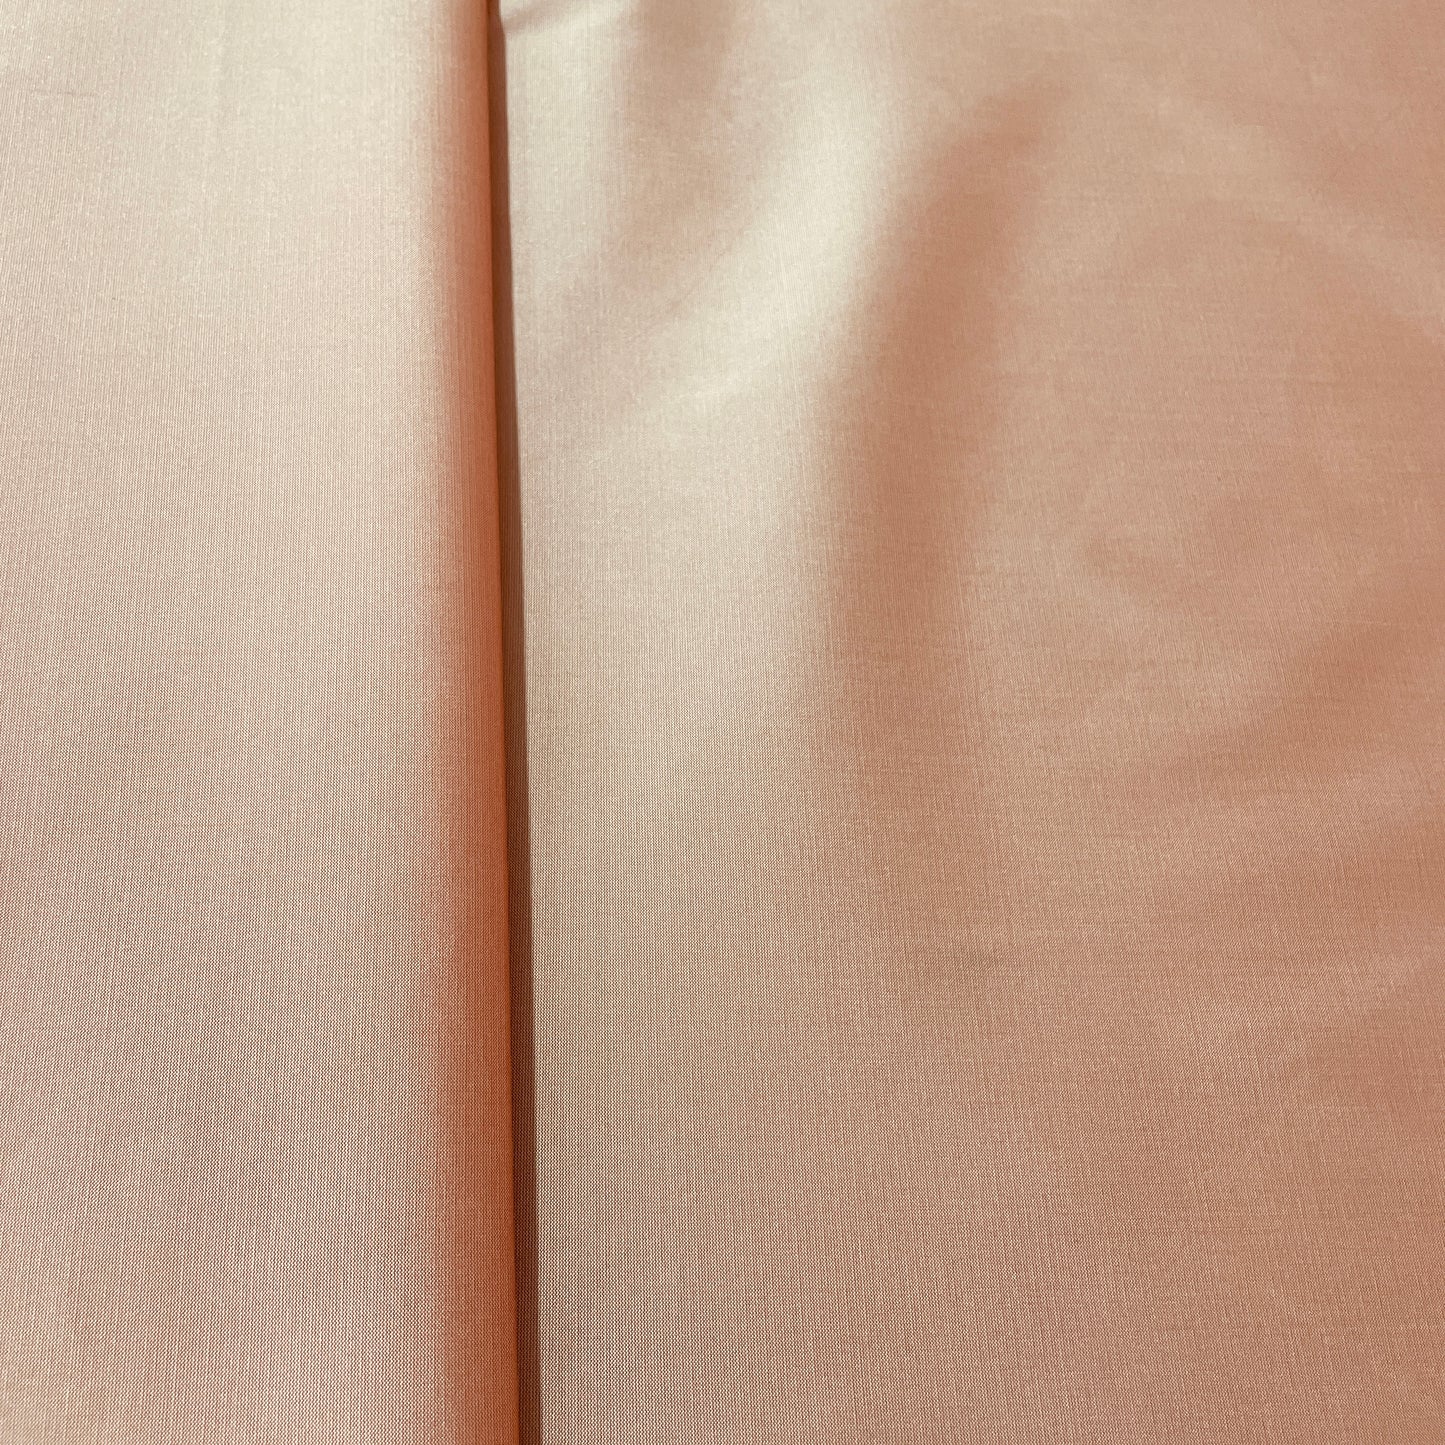 Peach Pink Solid Silk Taffeta Fabric